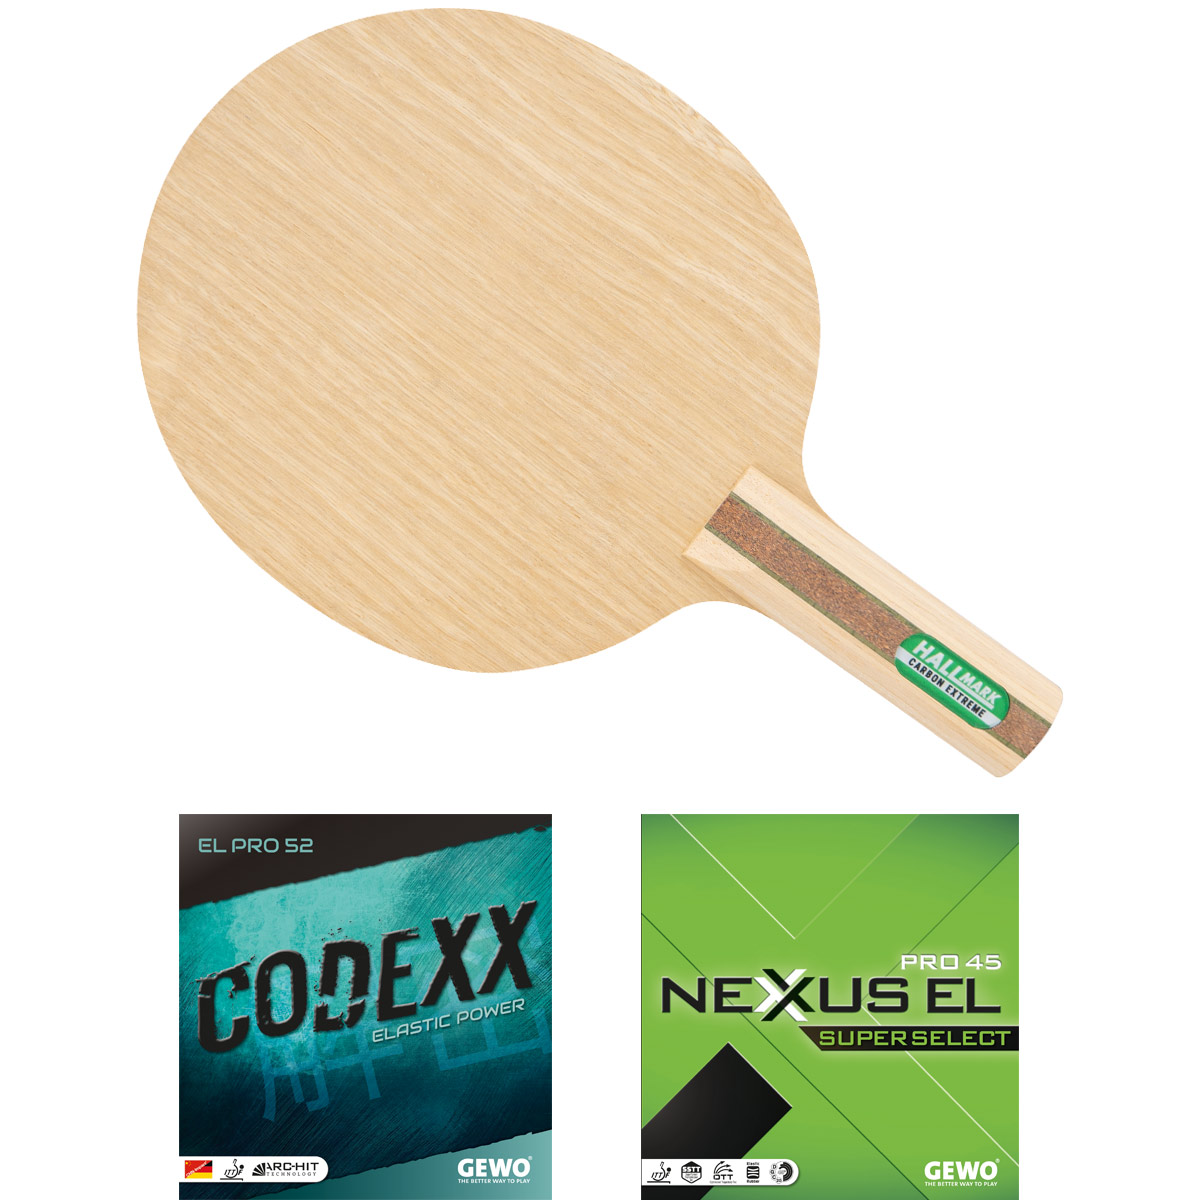 HALLMARK Schläger: Holz Carbon Extreme mit Codexx EL Pro52 + Nexxus EL Pro45 SupSel